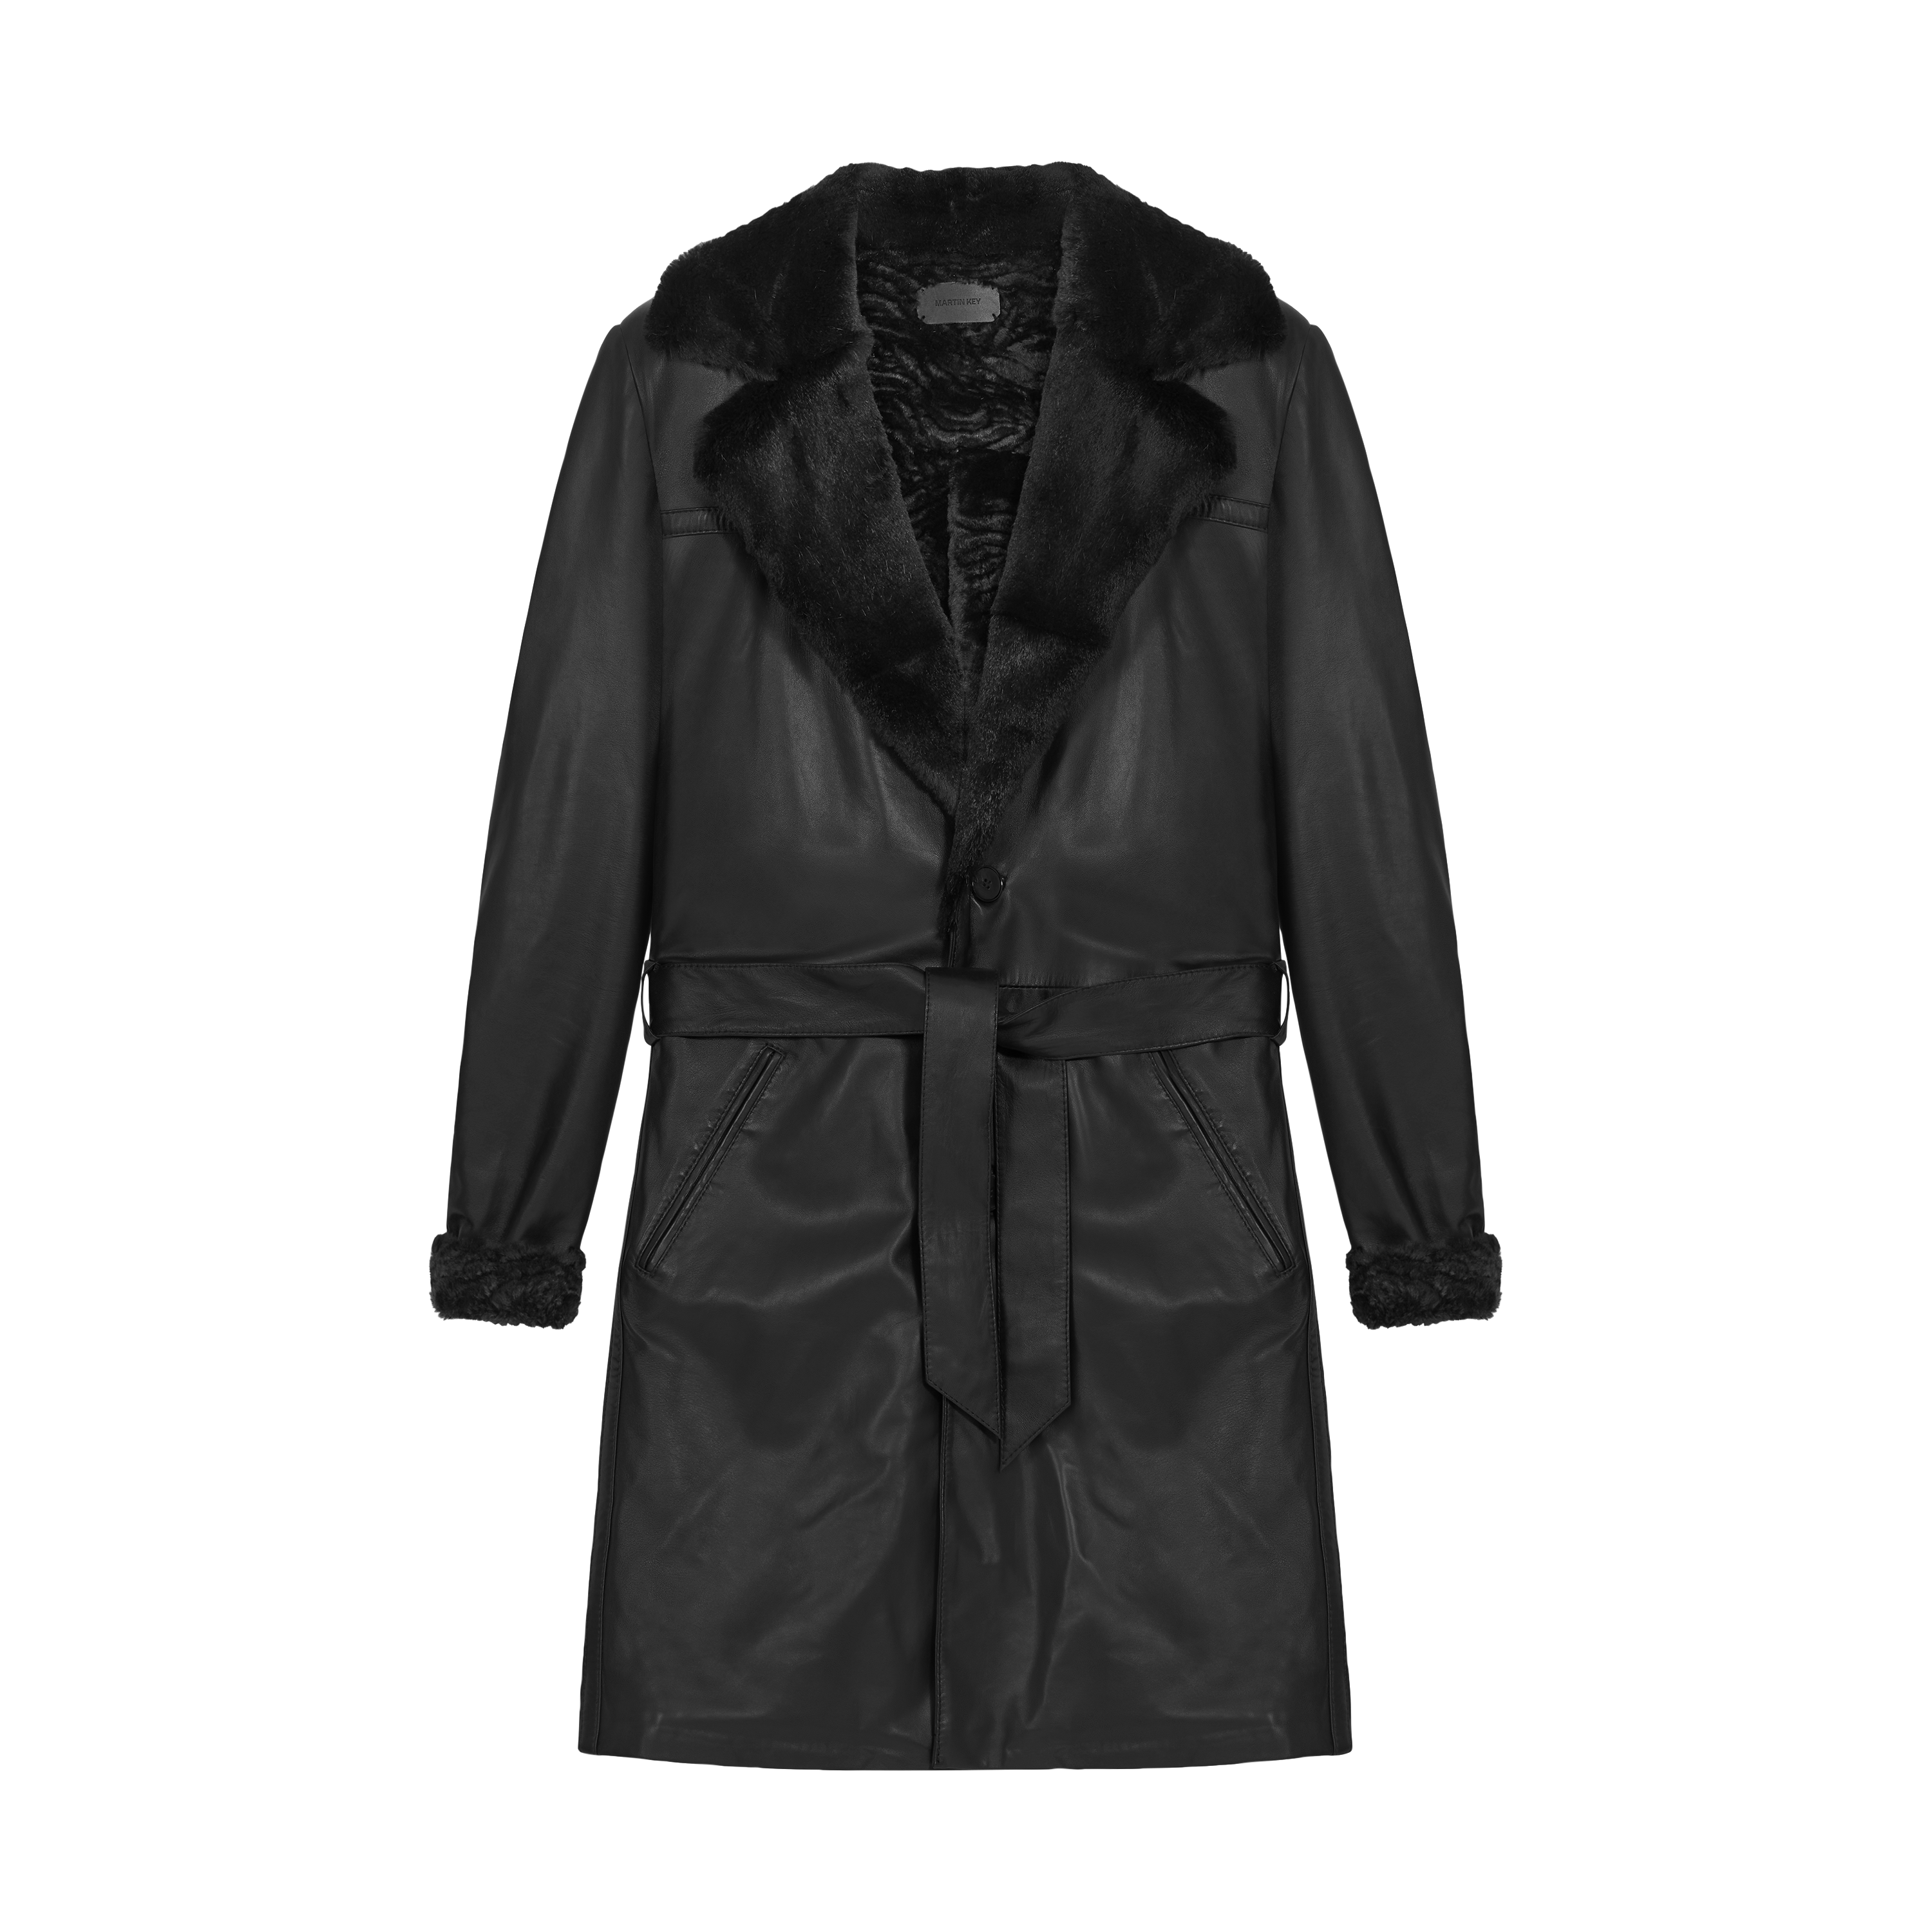 Leather coat - Zermatt by Martin Key